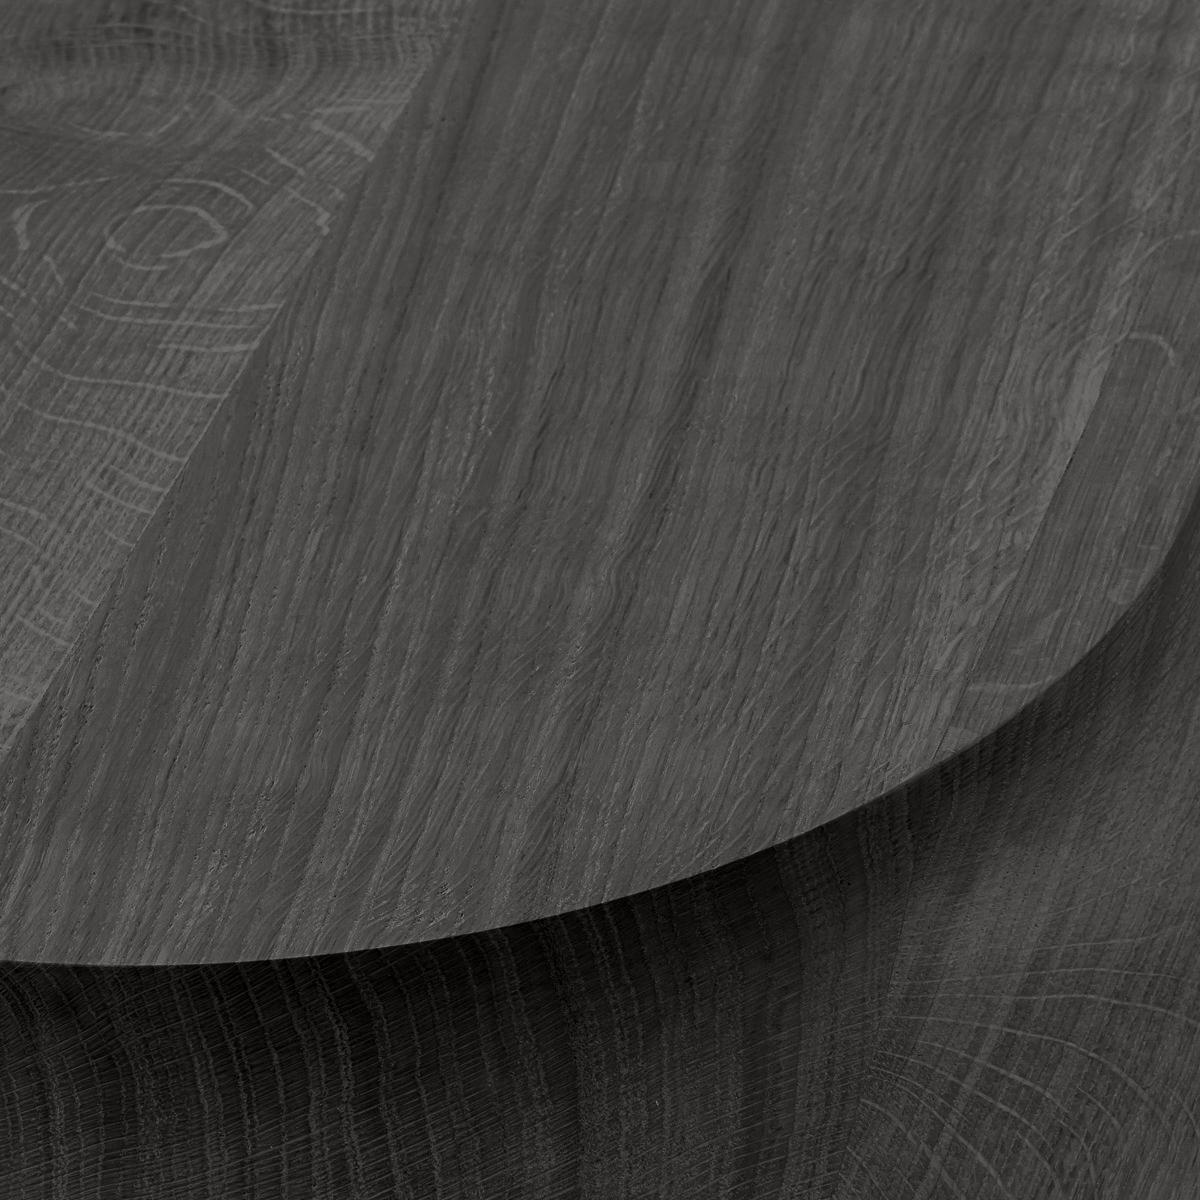 Benni Allan 'Low Table One' in blackened oak by EBBA, UK, 2023 For Sale 1